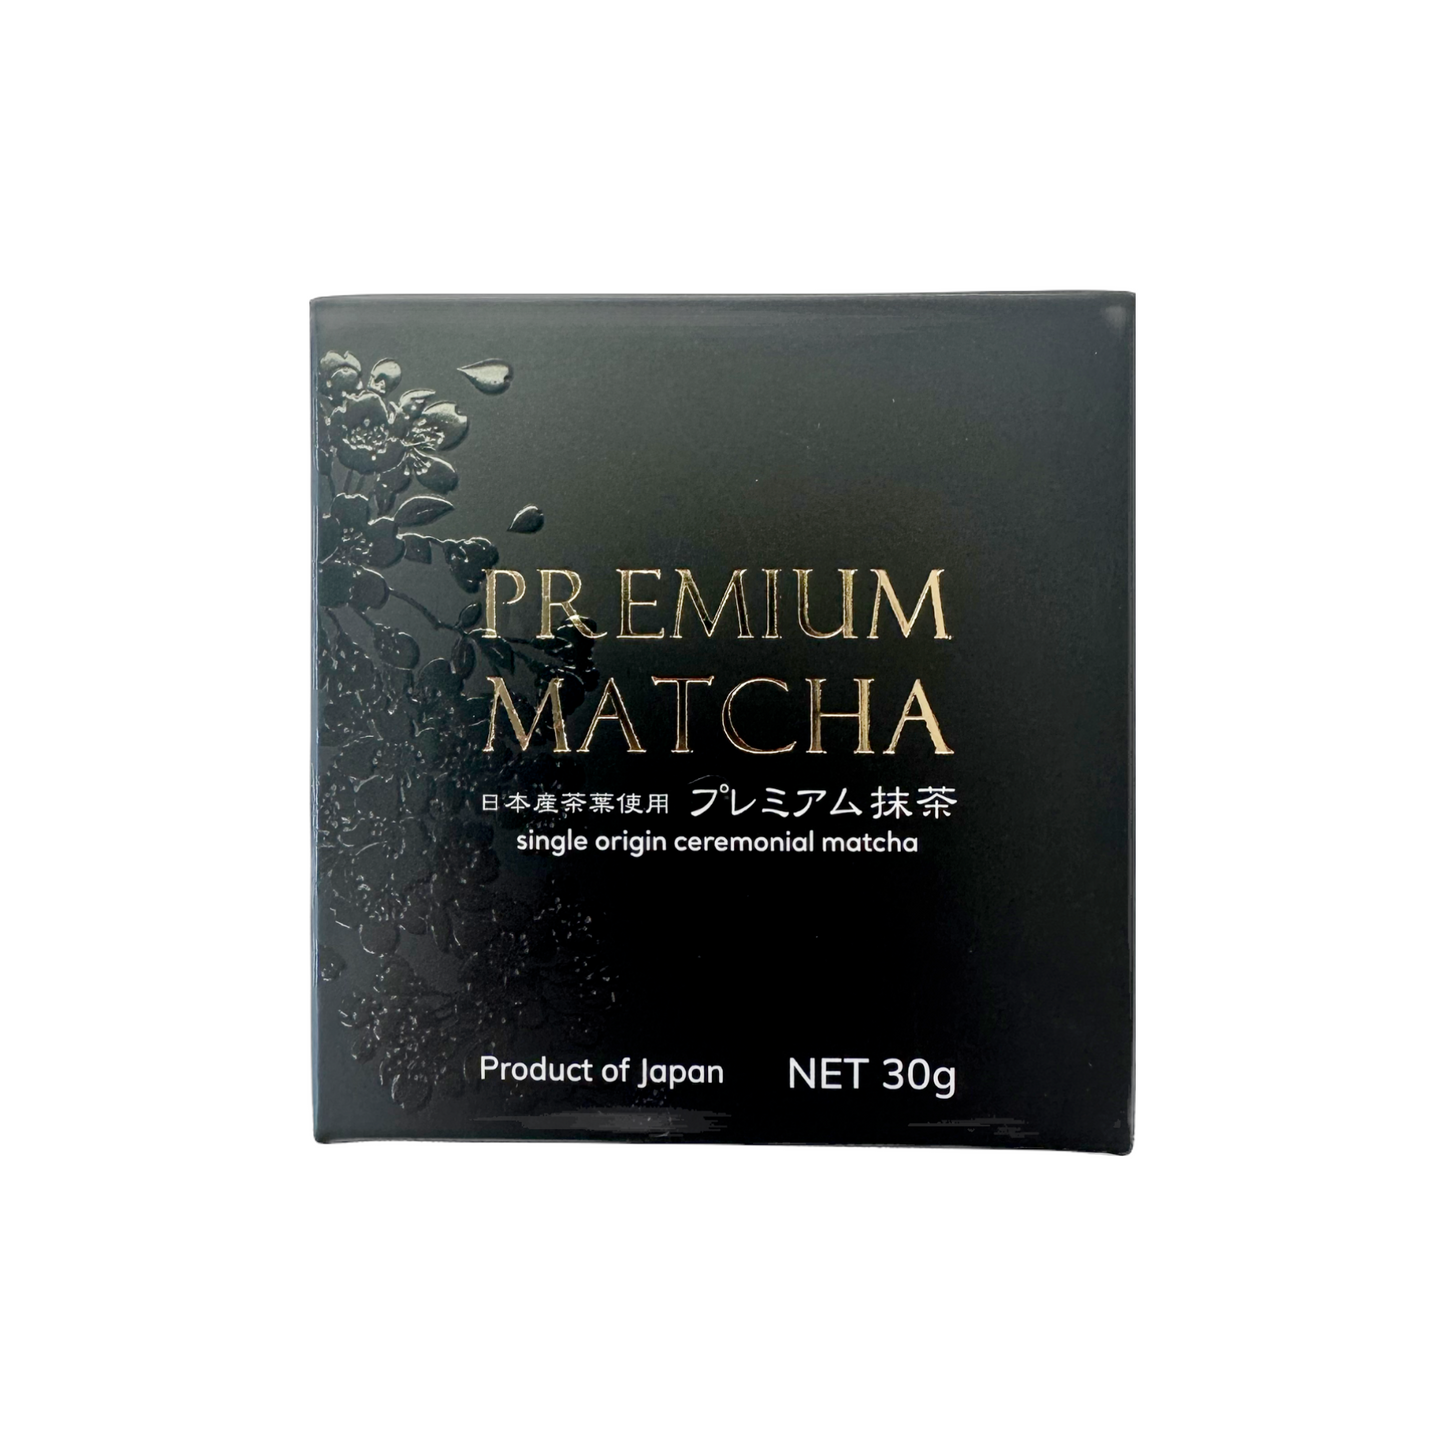 Premium Matcha Powder, Uji Kyoto（30g）